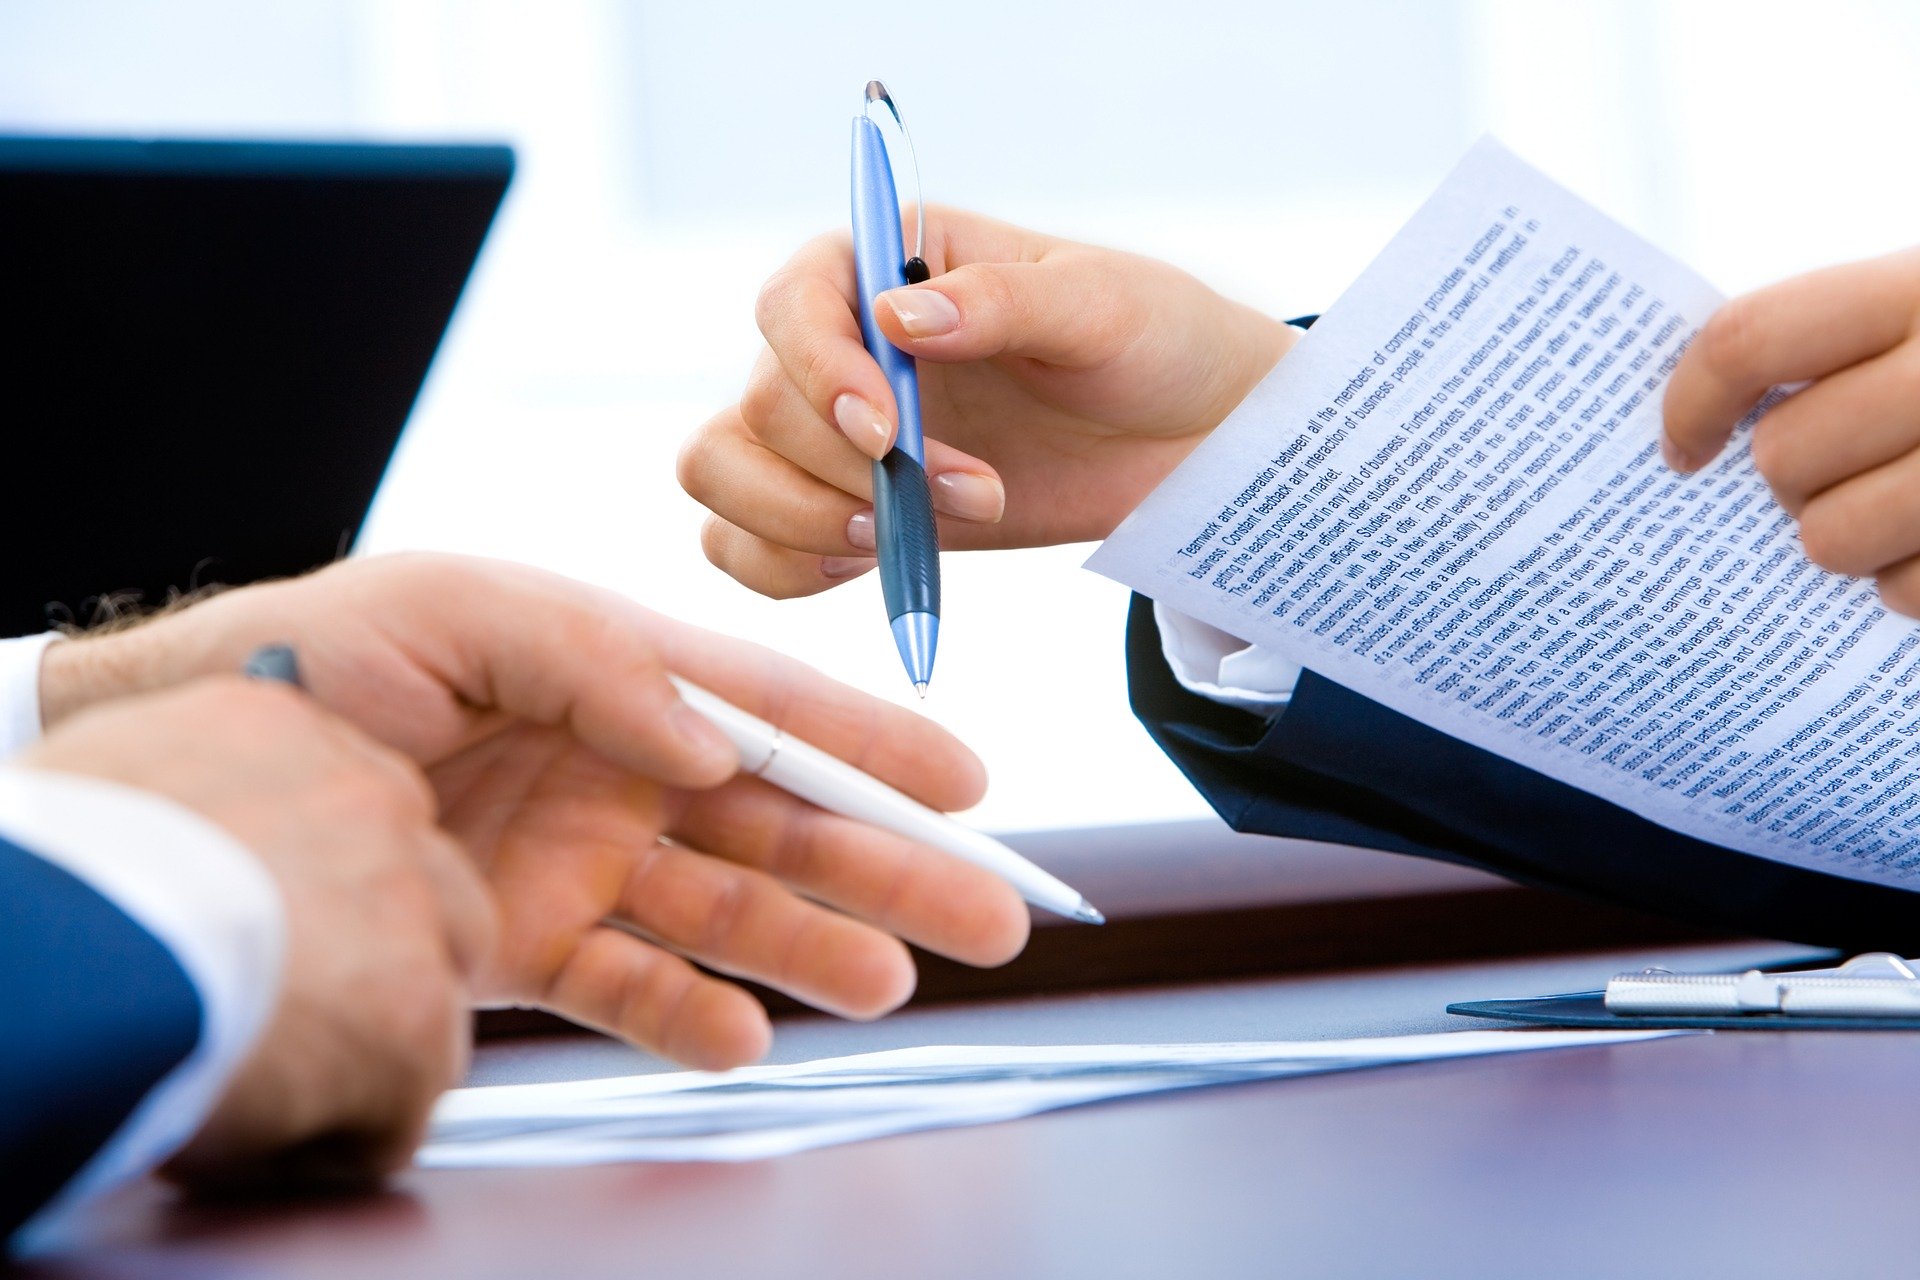 Curs sobre com redactar documents administratius formals